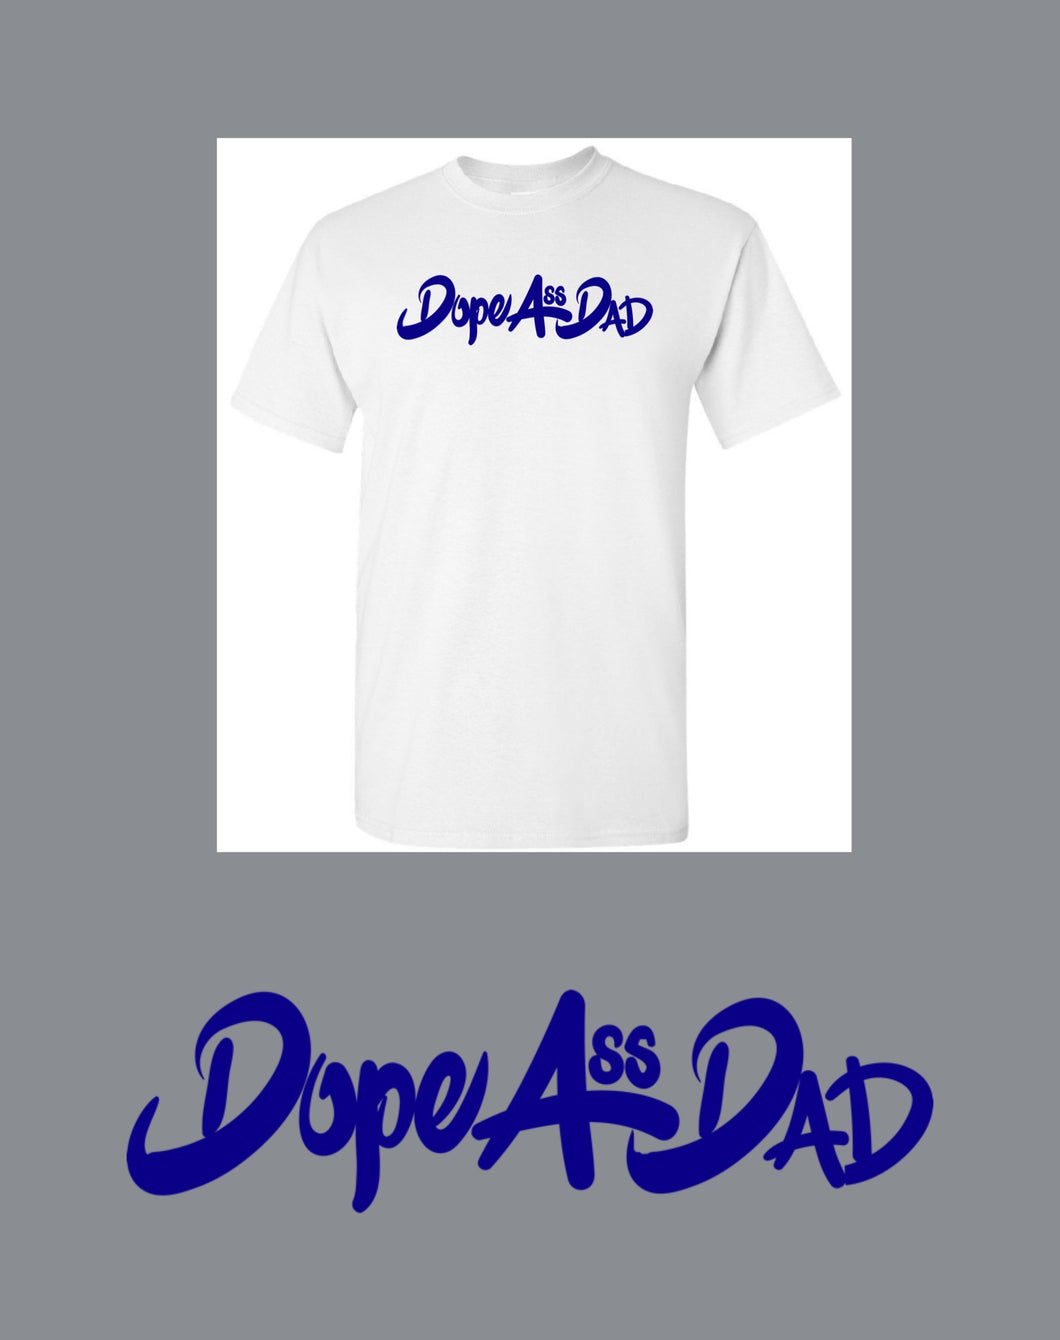 The Basic Dad Shirt (White/Blue)